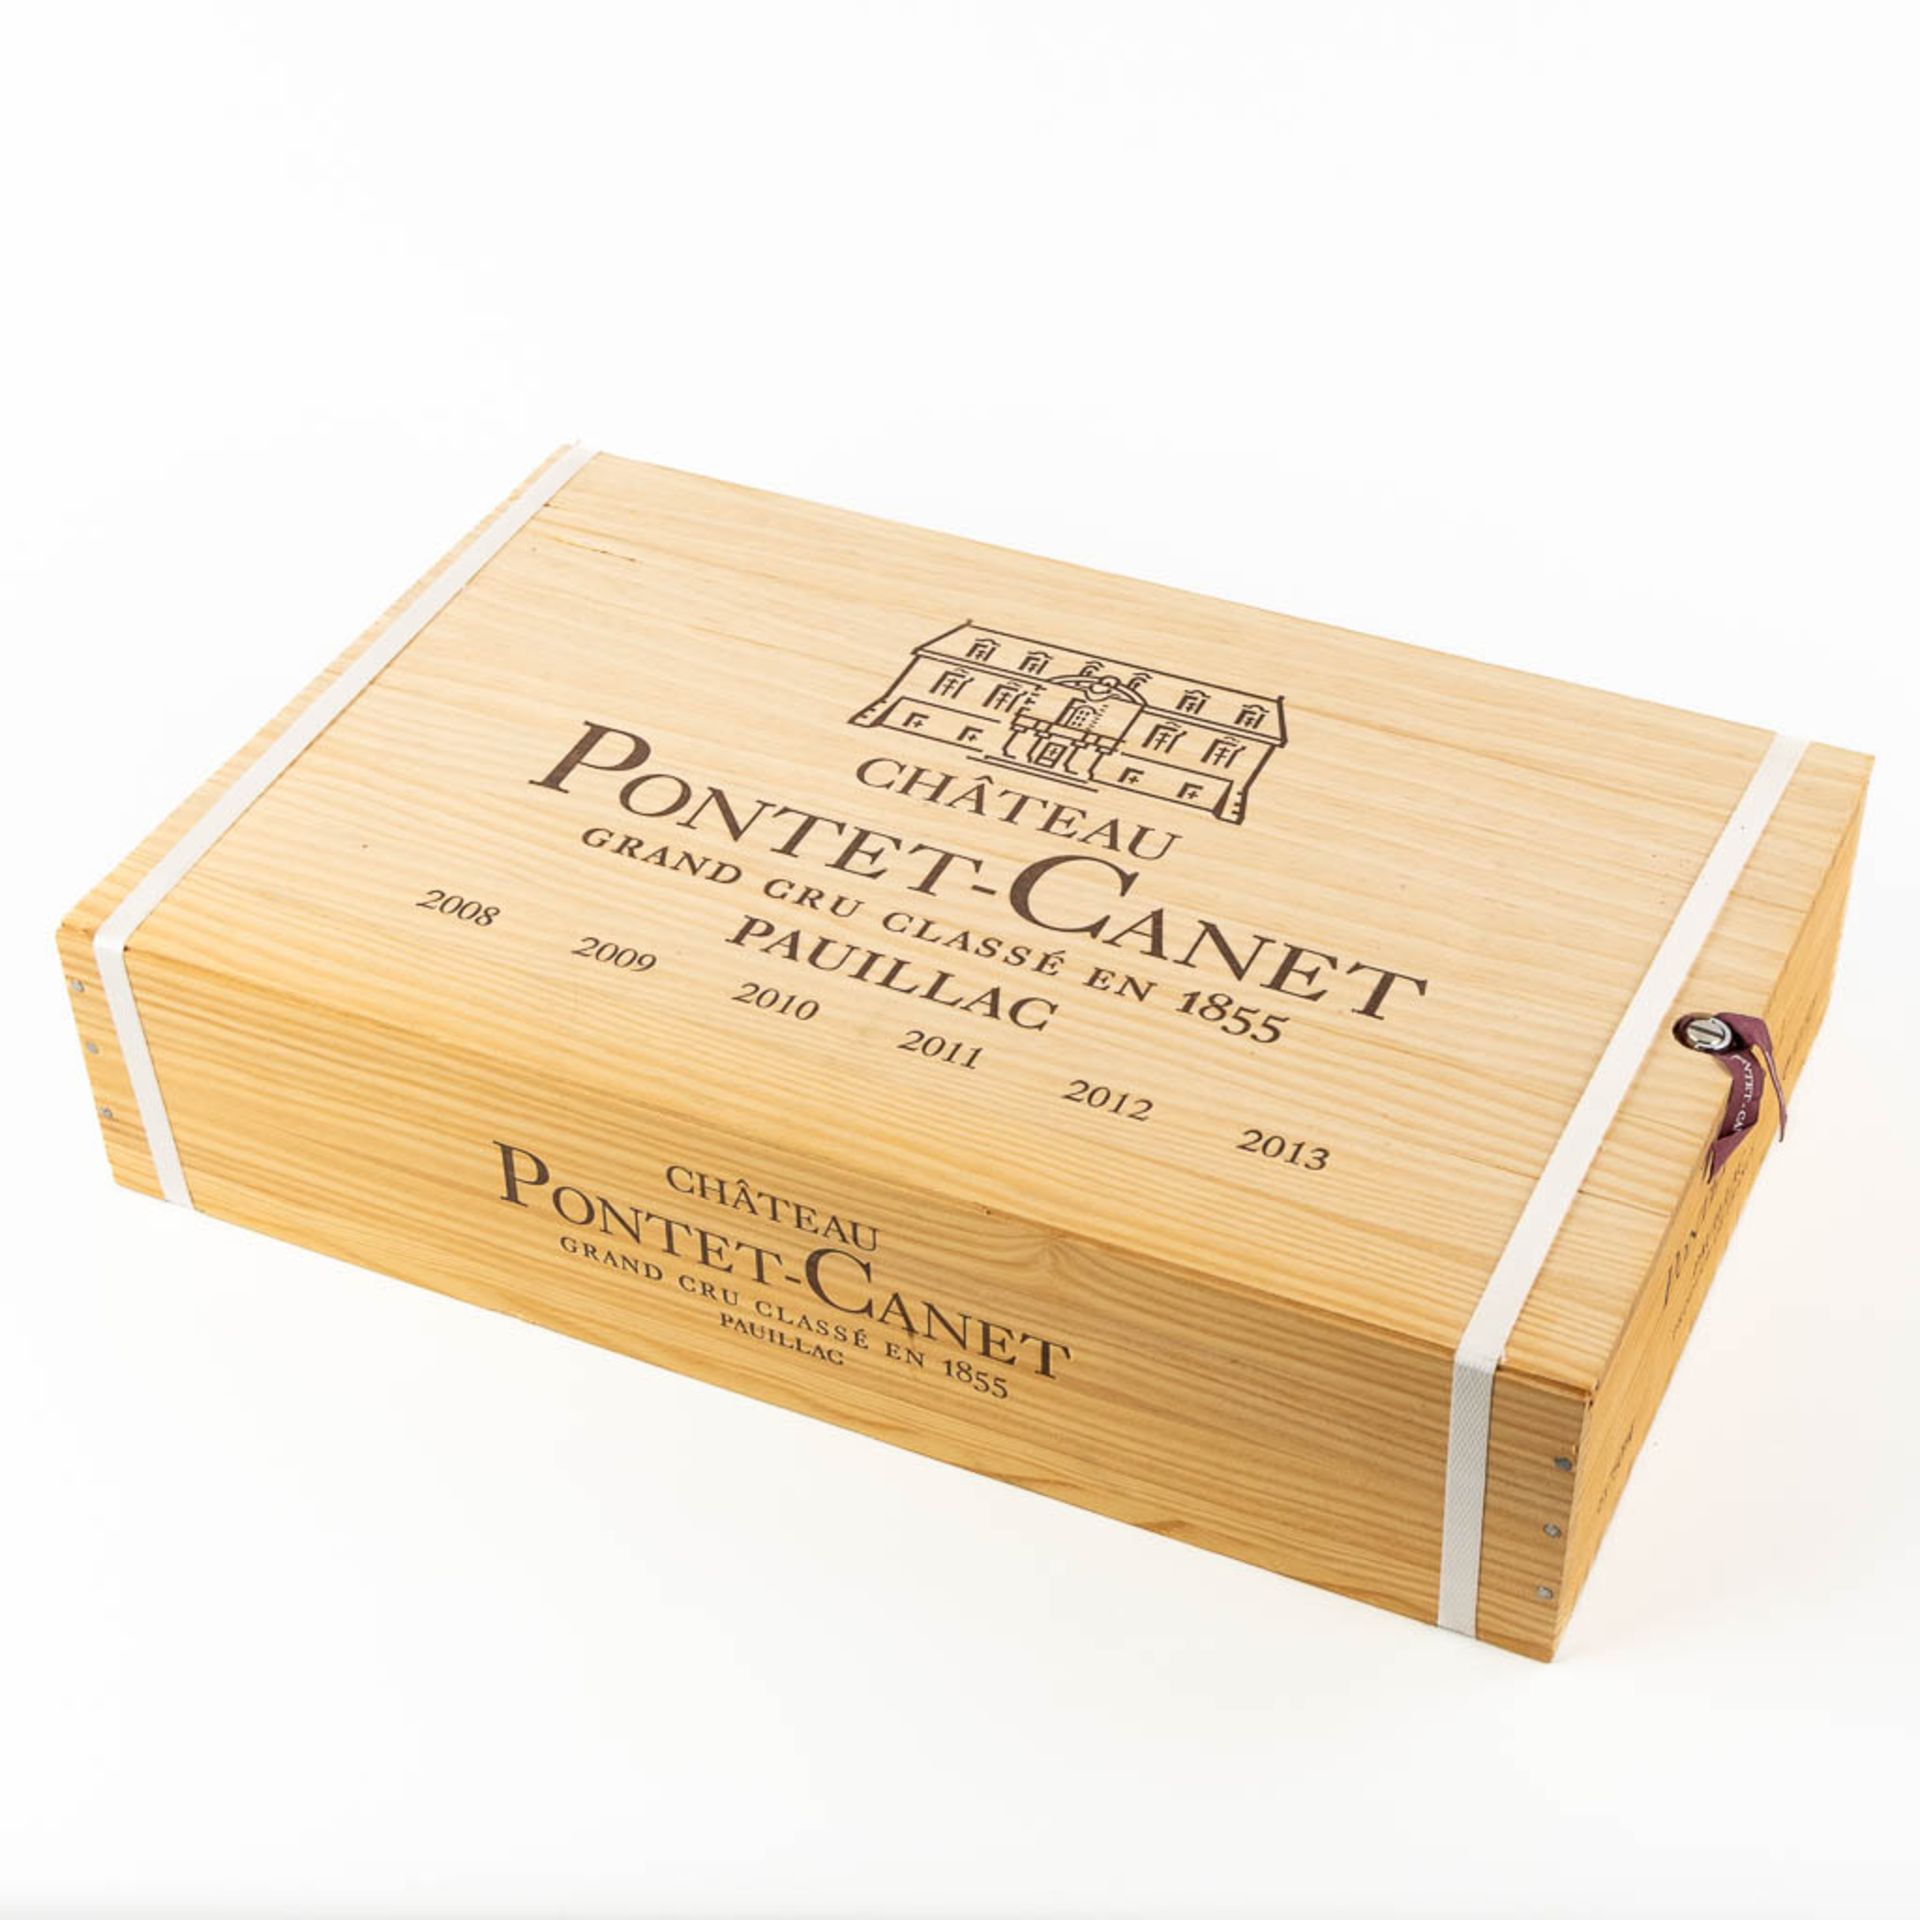 2008-2013 Pontet Canet Collection Case (owc)